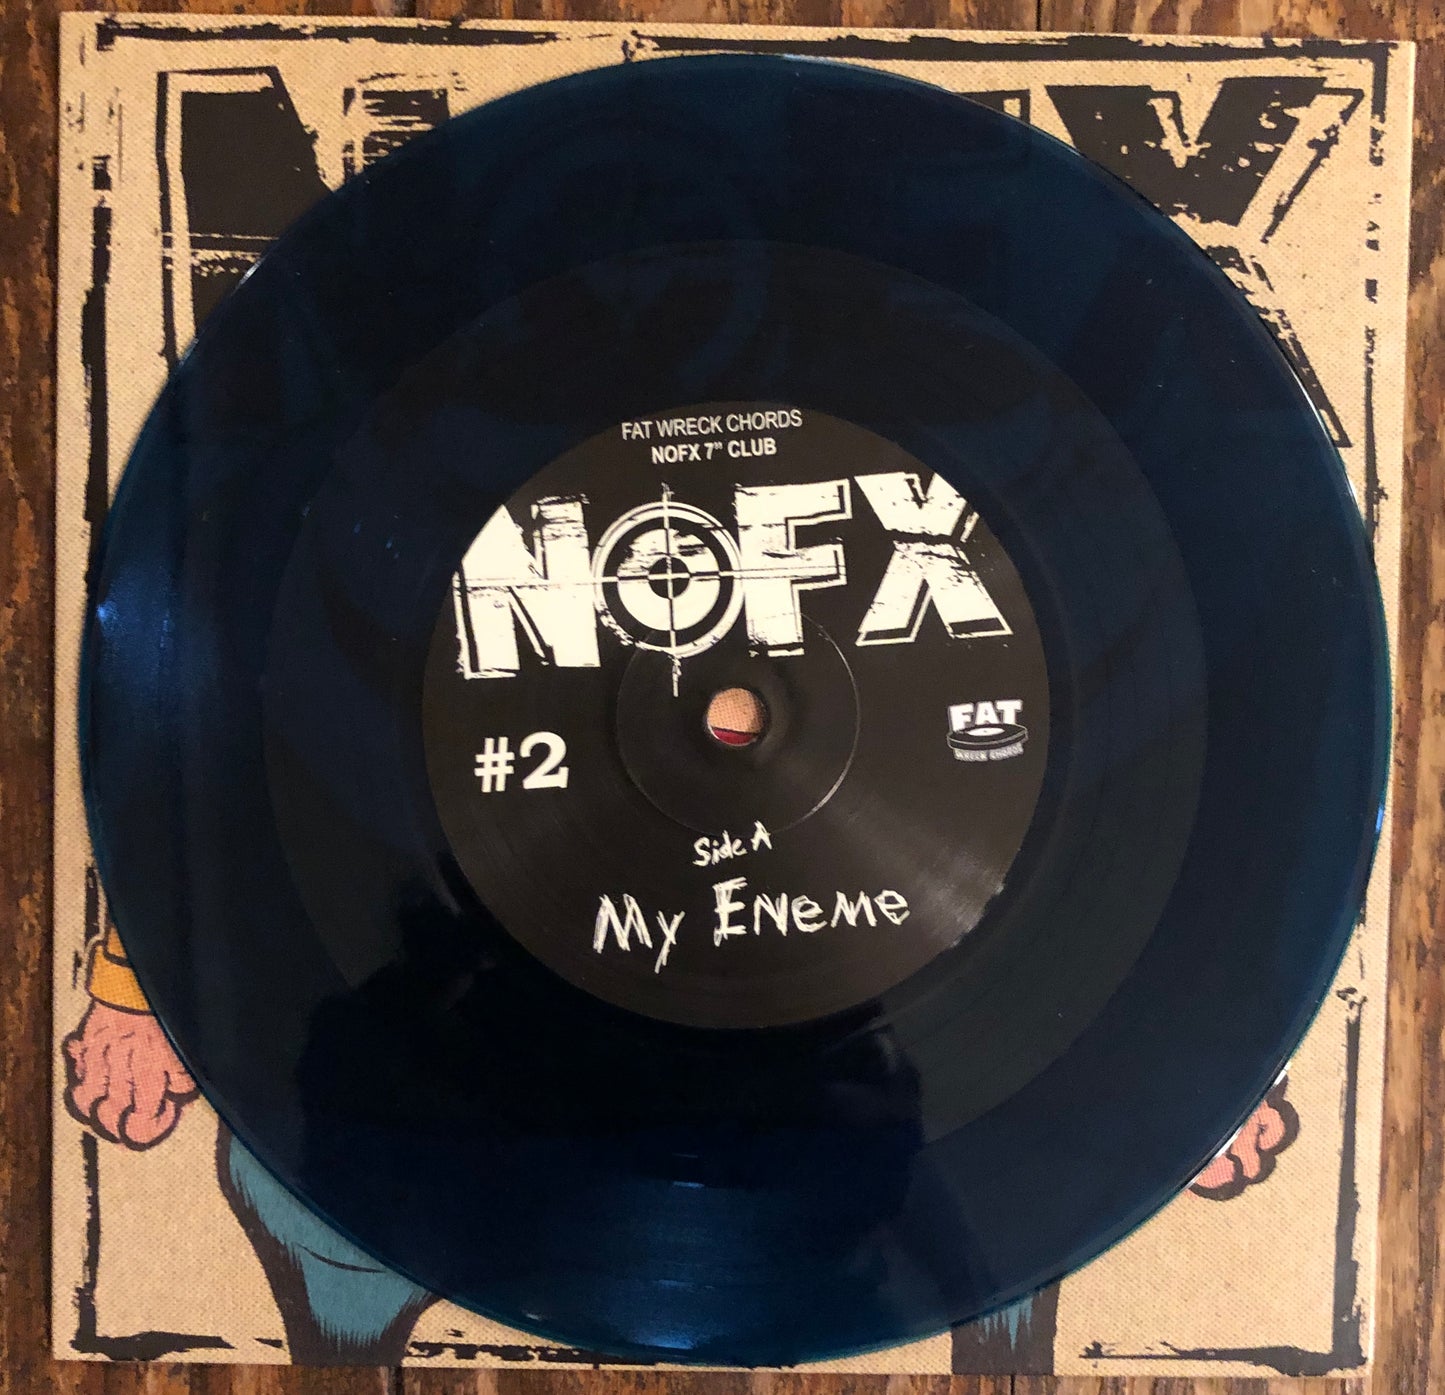 NOFX "My Eneme"